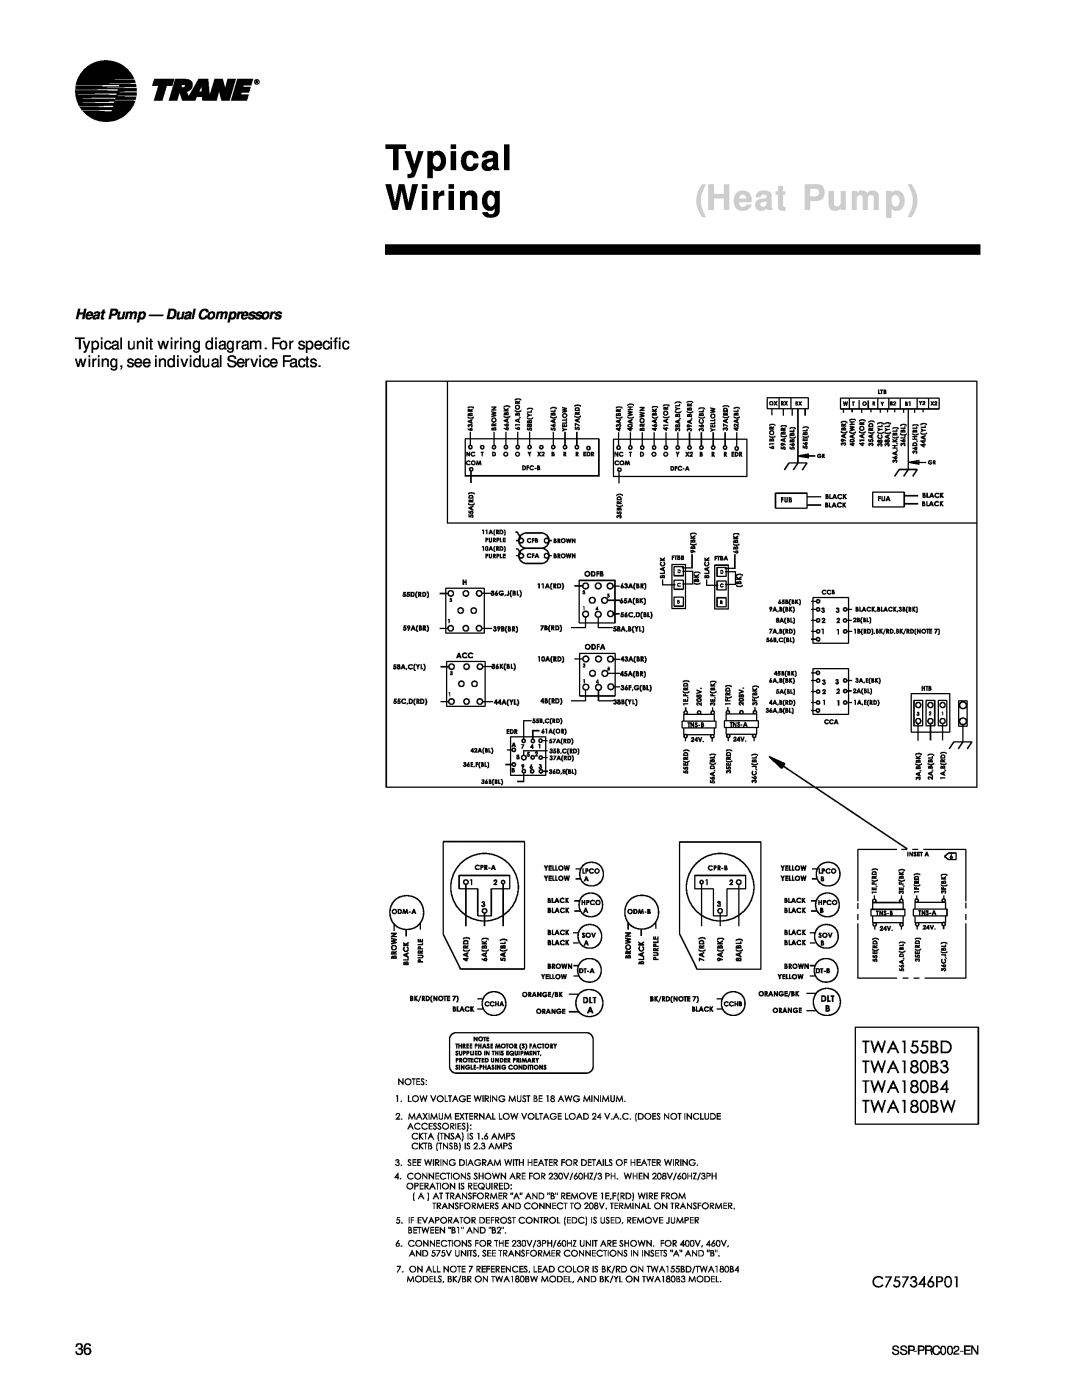 Trane TWA075A, TWE200B, TWA200B, TWE050A manual Typical, Wiring, Heat Pump - Dual Compressors 